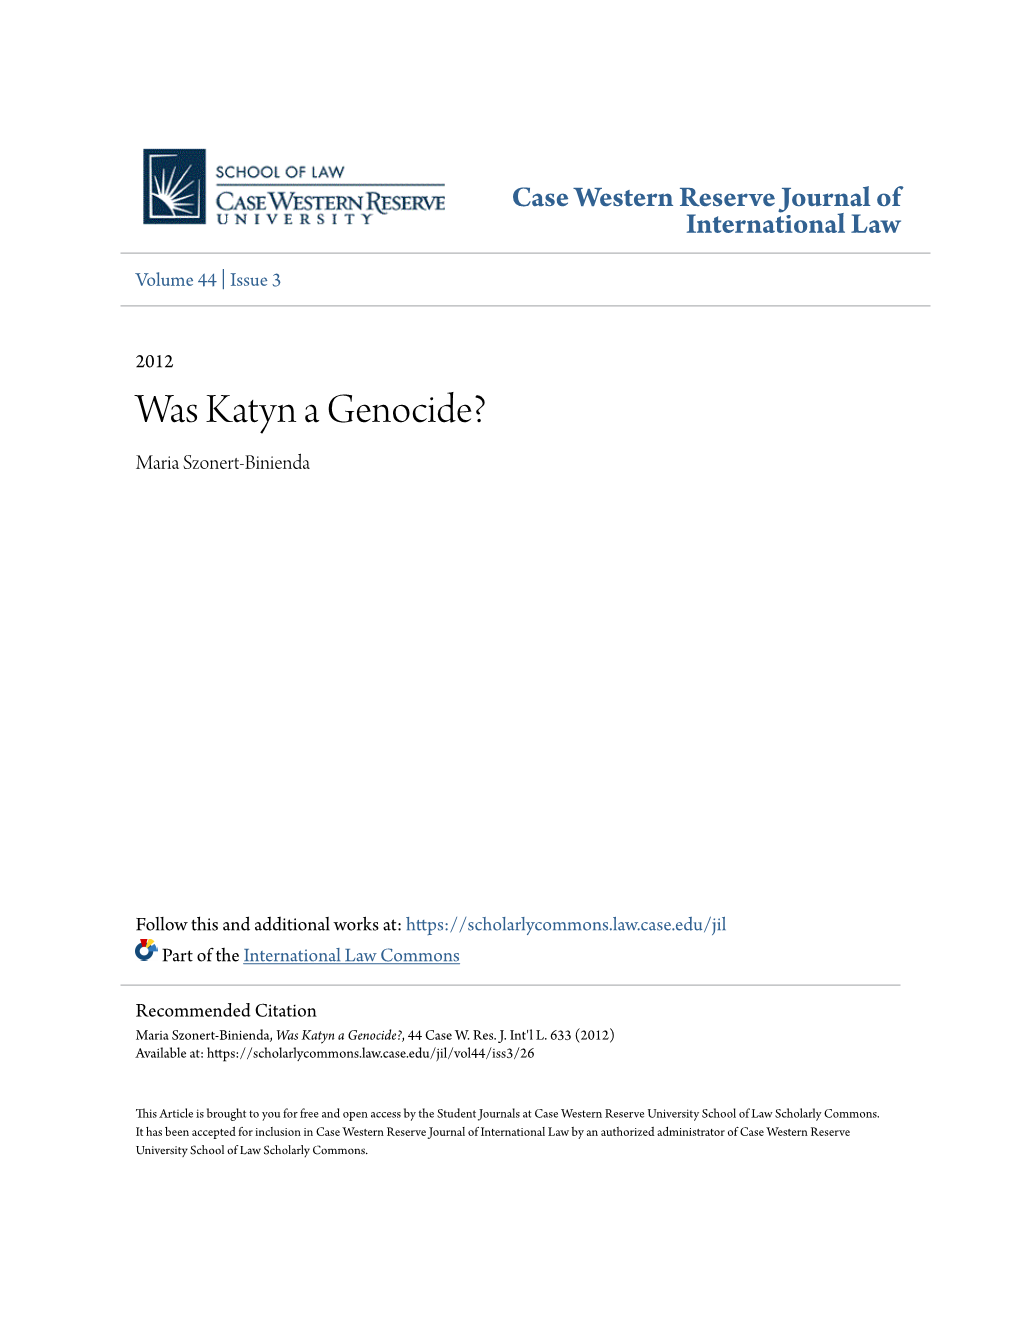 Was Katyn a Genocide? Maria Szonert-Binienda